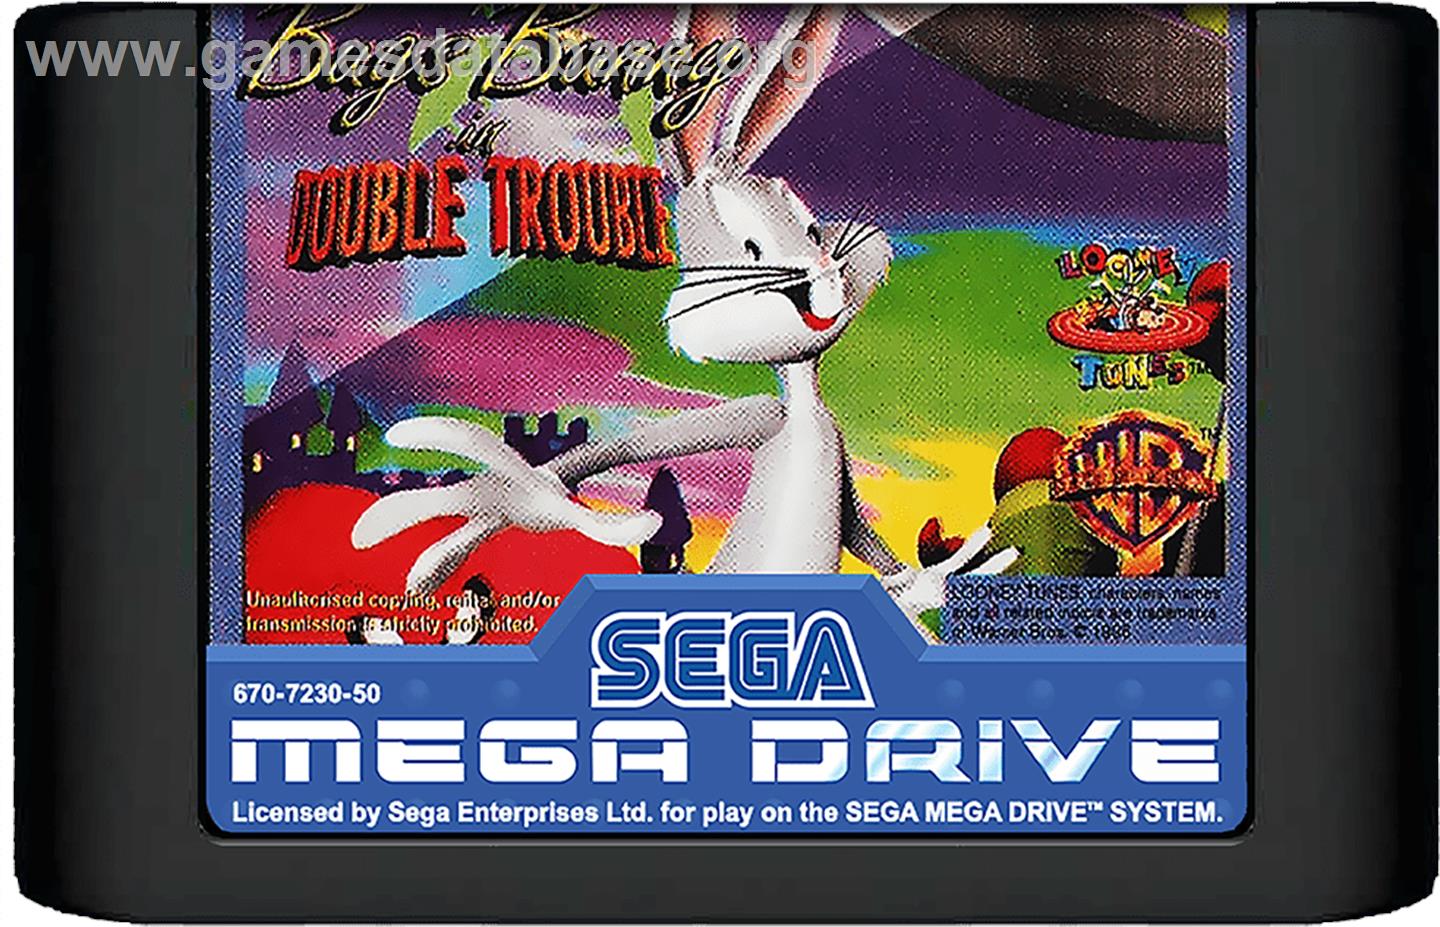 Bugs Bunny in Double Trouble - Sega Genesis - Artwork - Cartridge